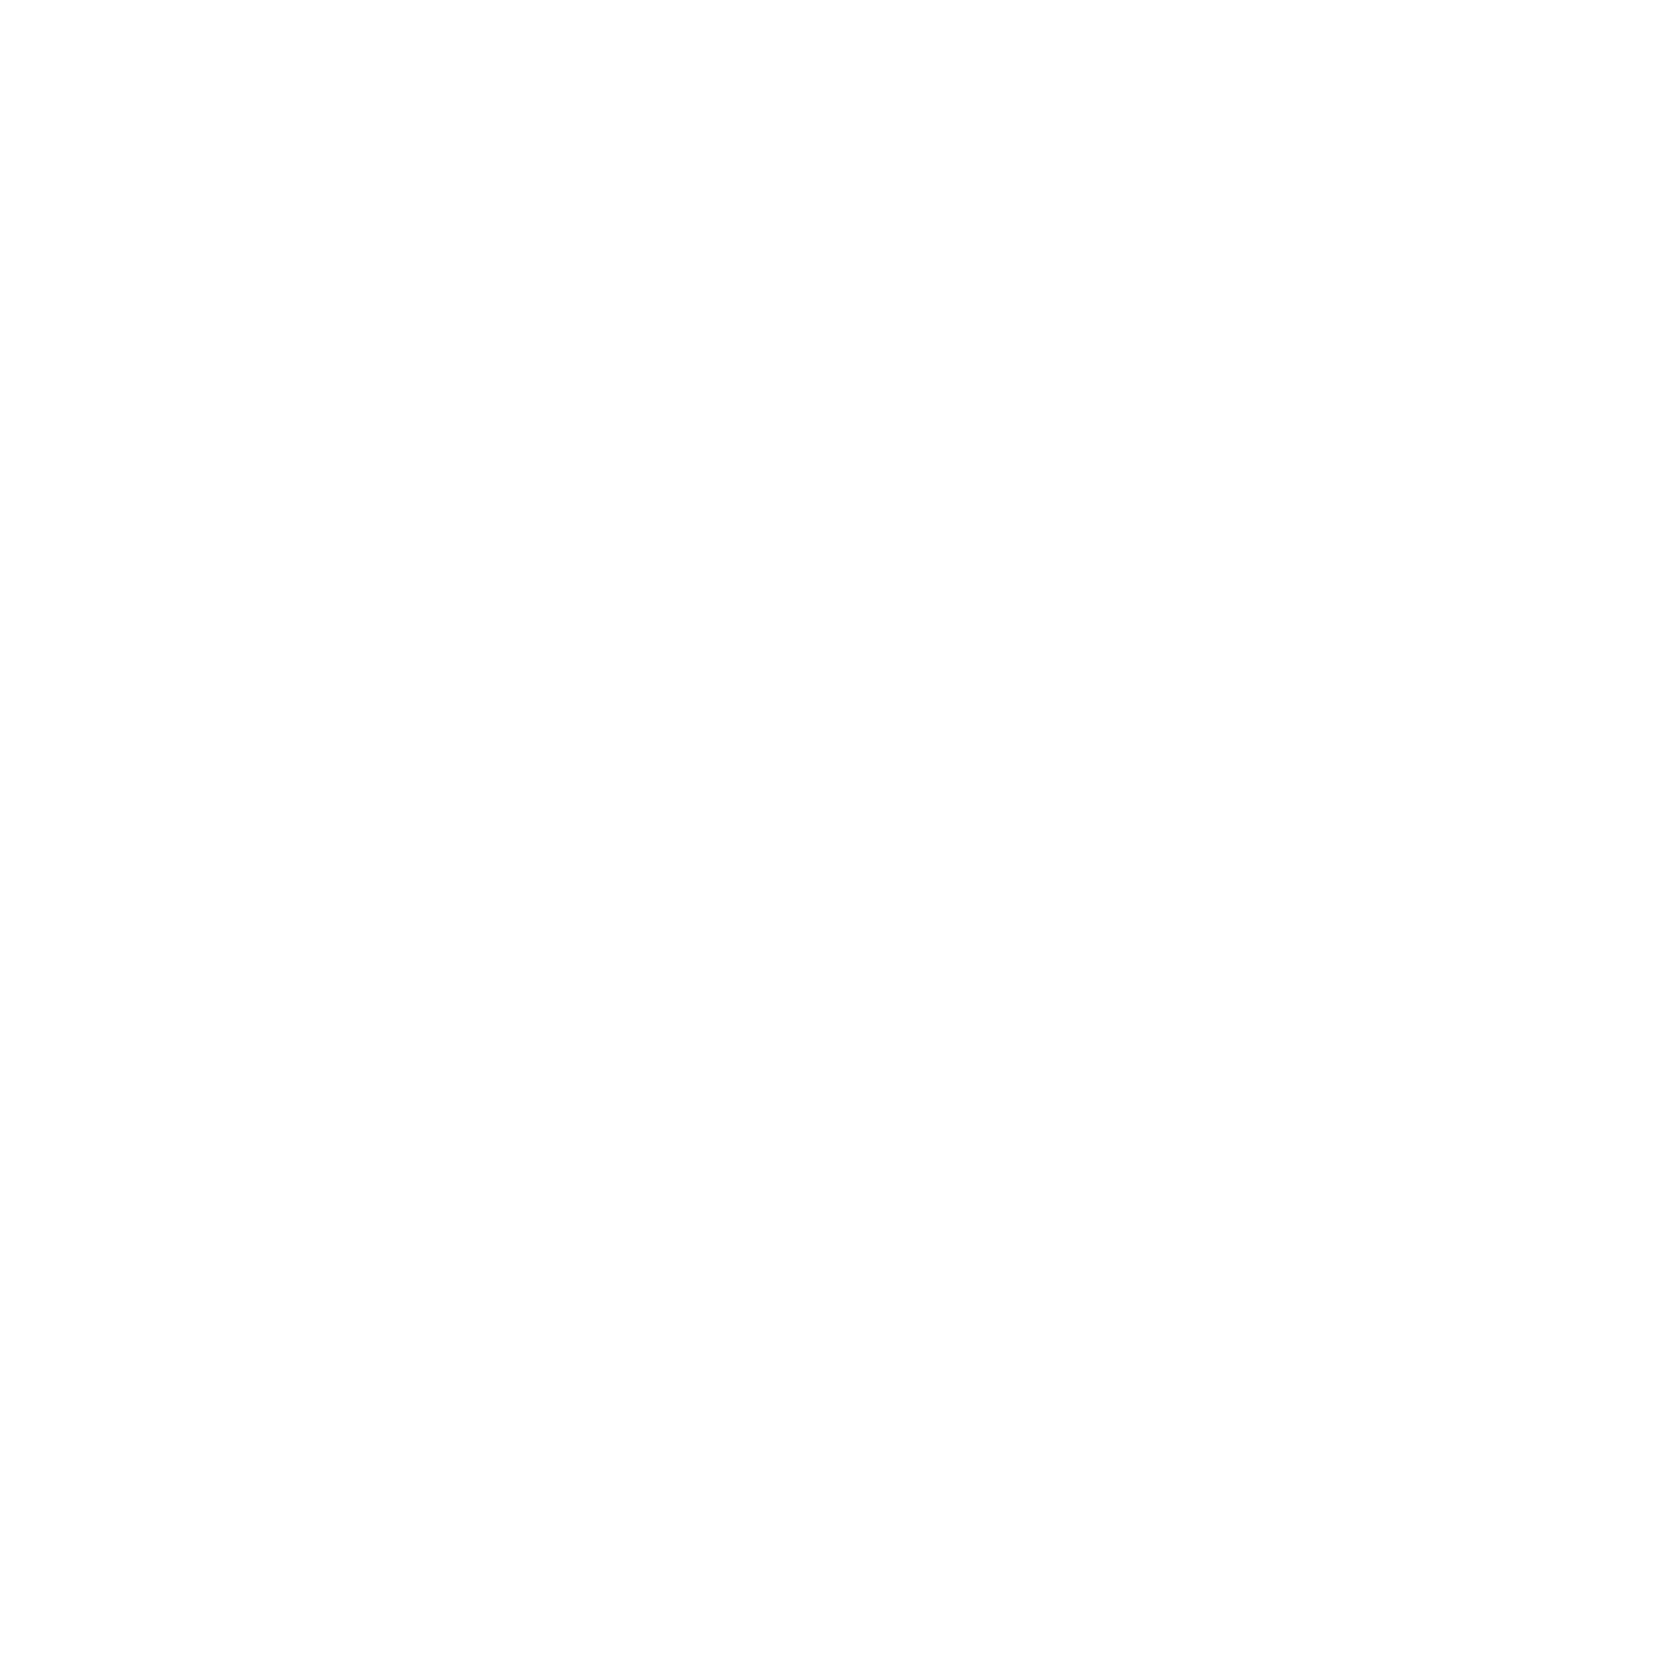 Scuba mask icon